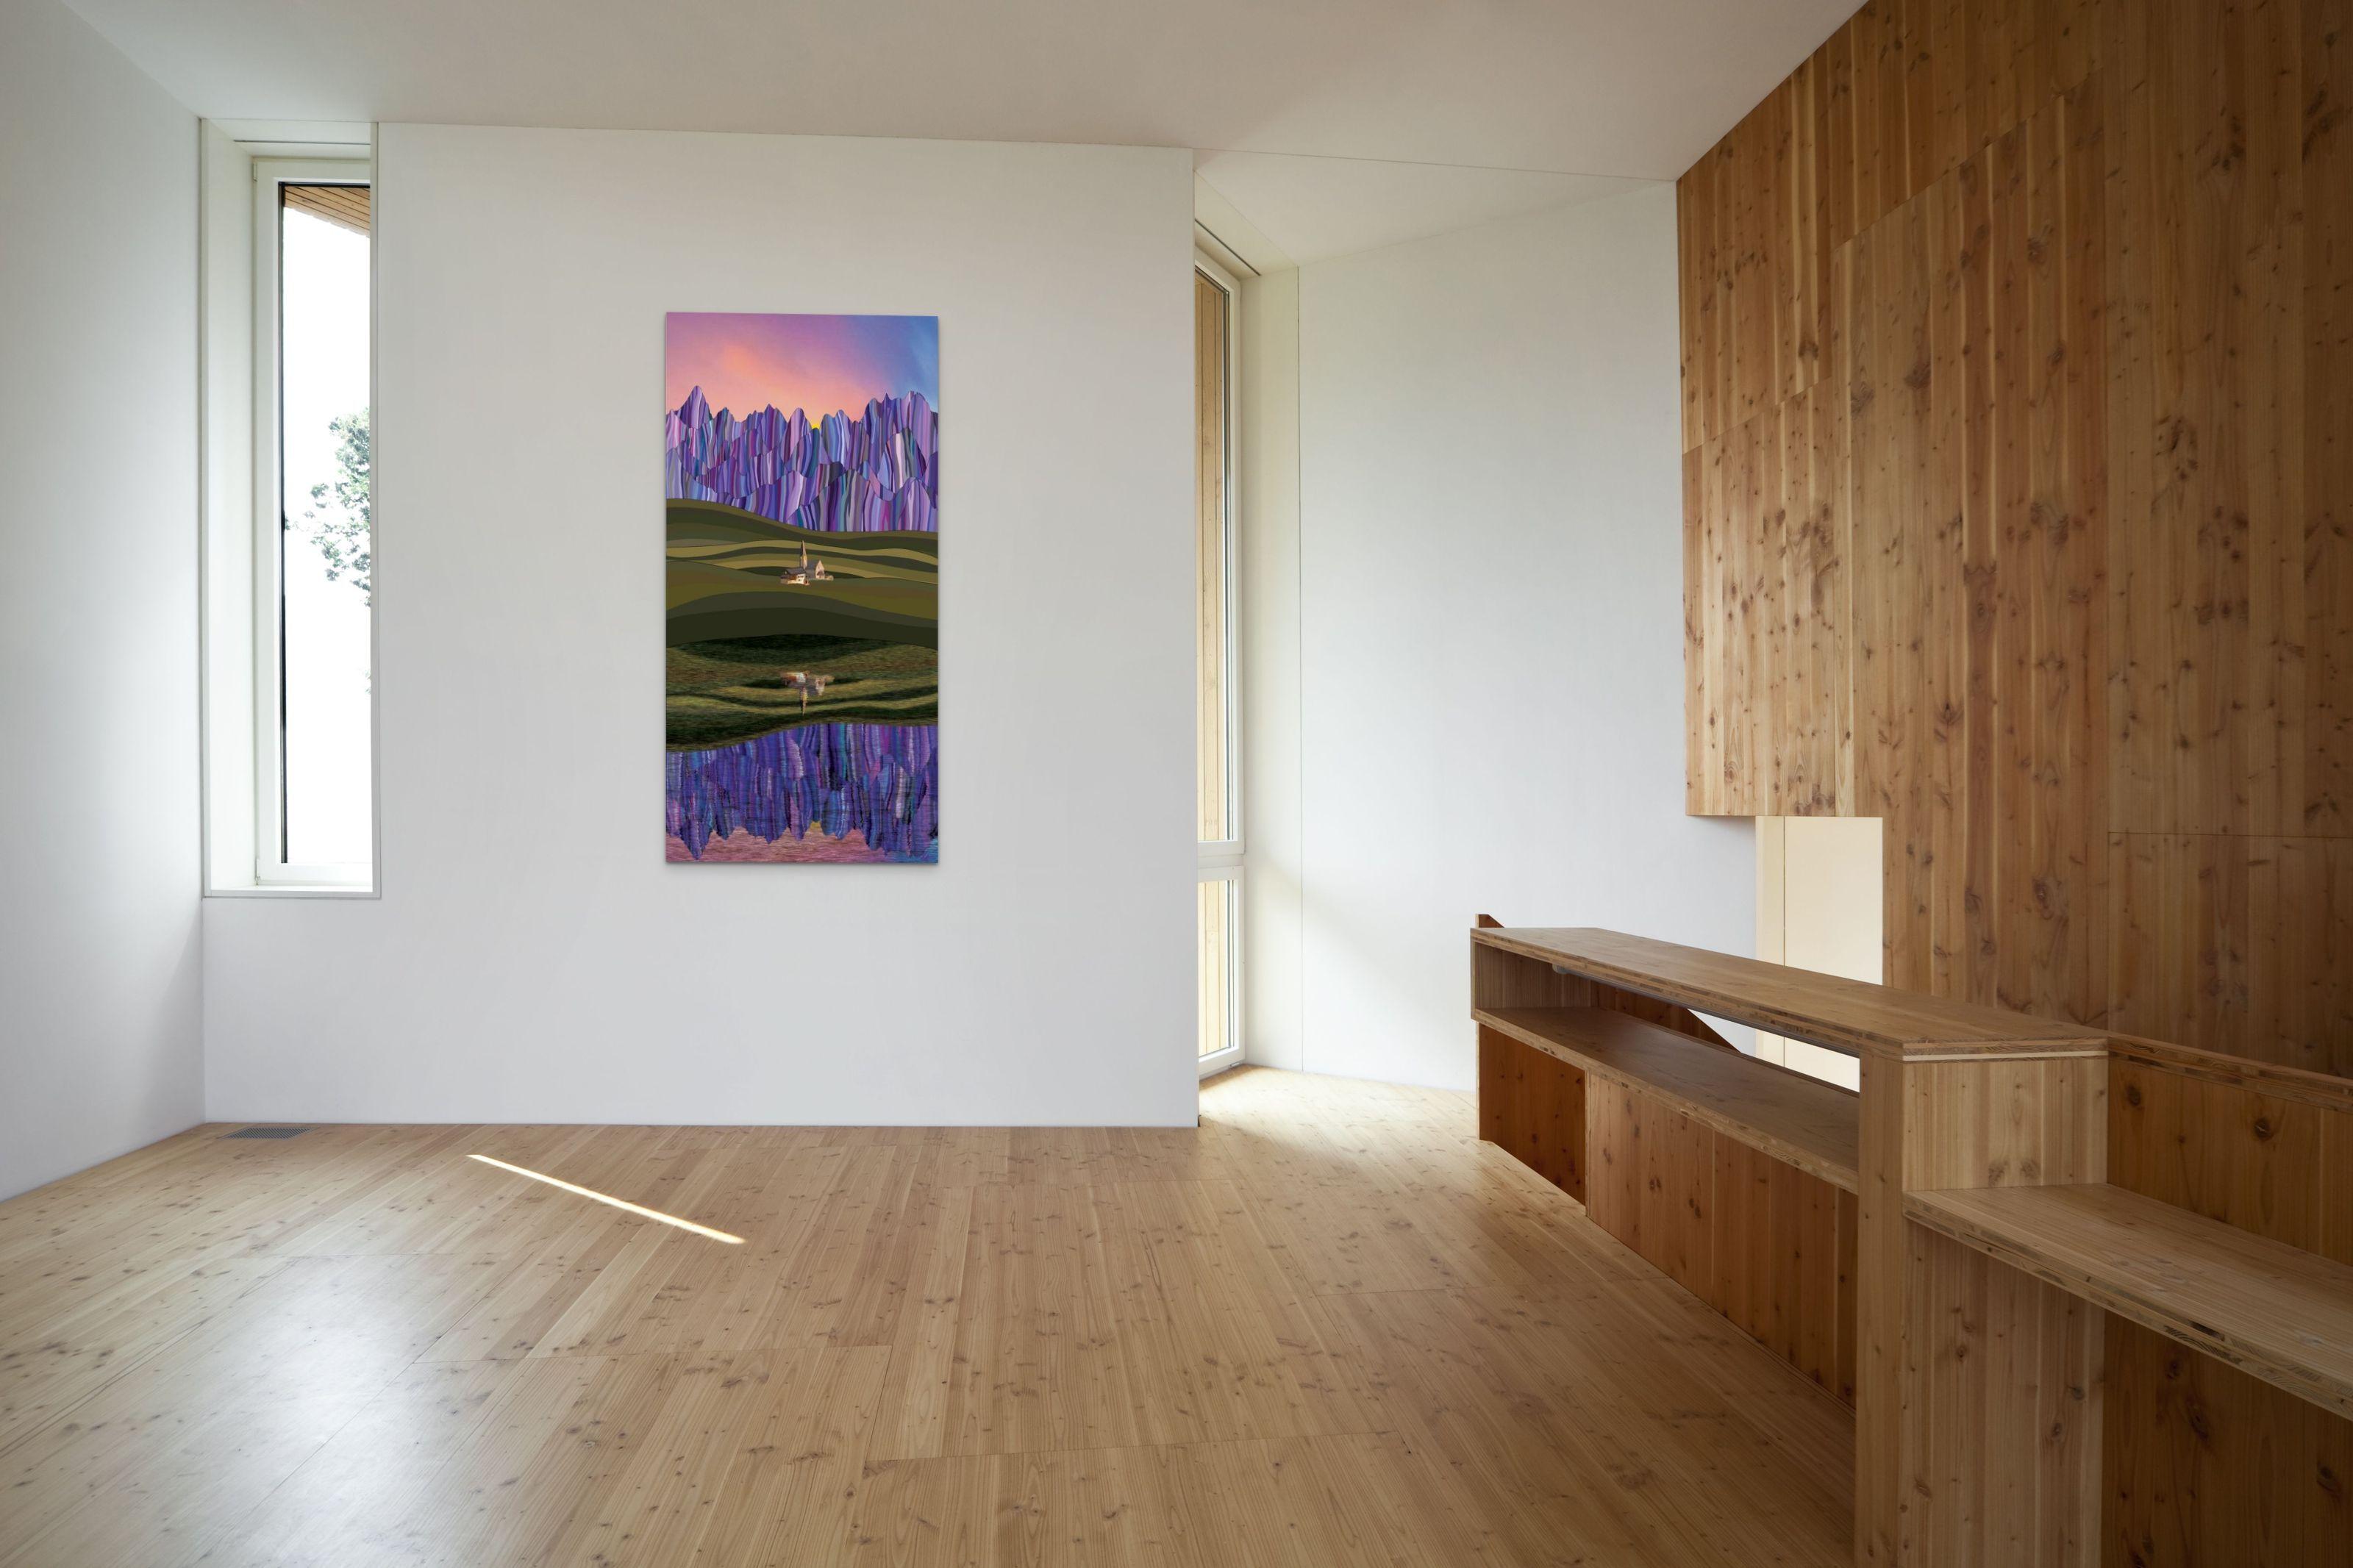 Dolomites, Modern Impressionist Landscape Painting, Italy, Mountains, Ltd Ed For Sale 1